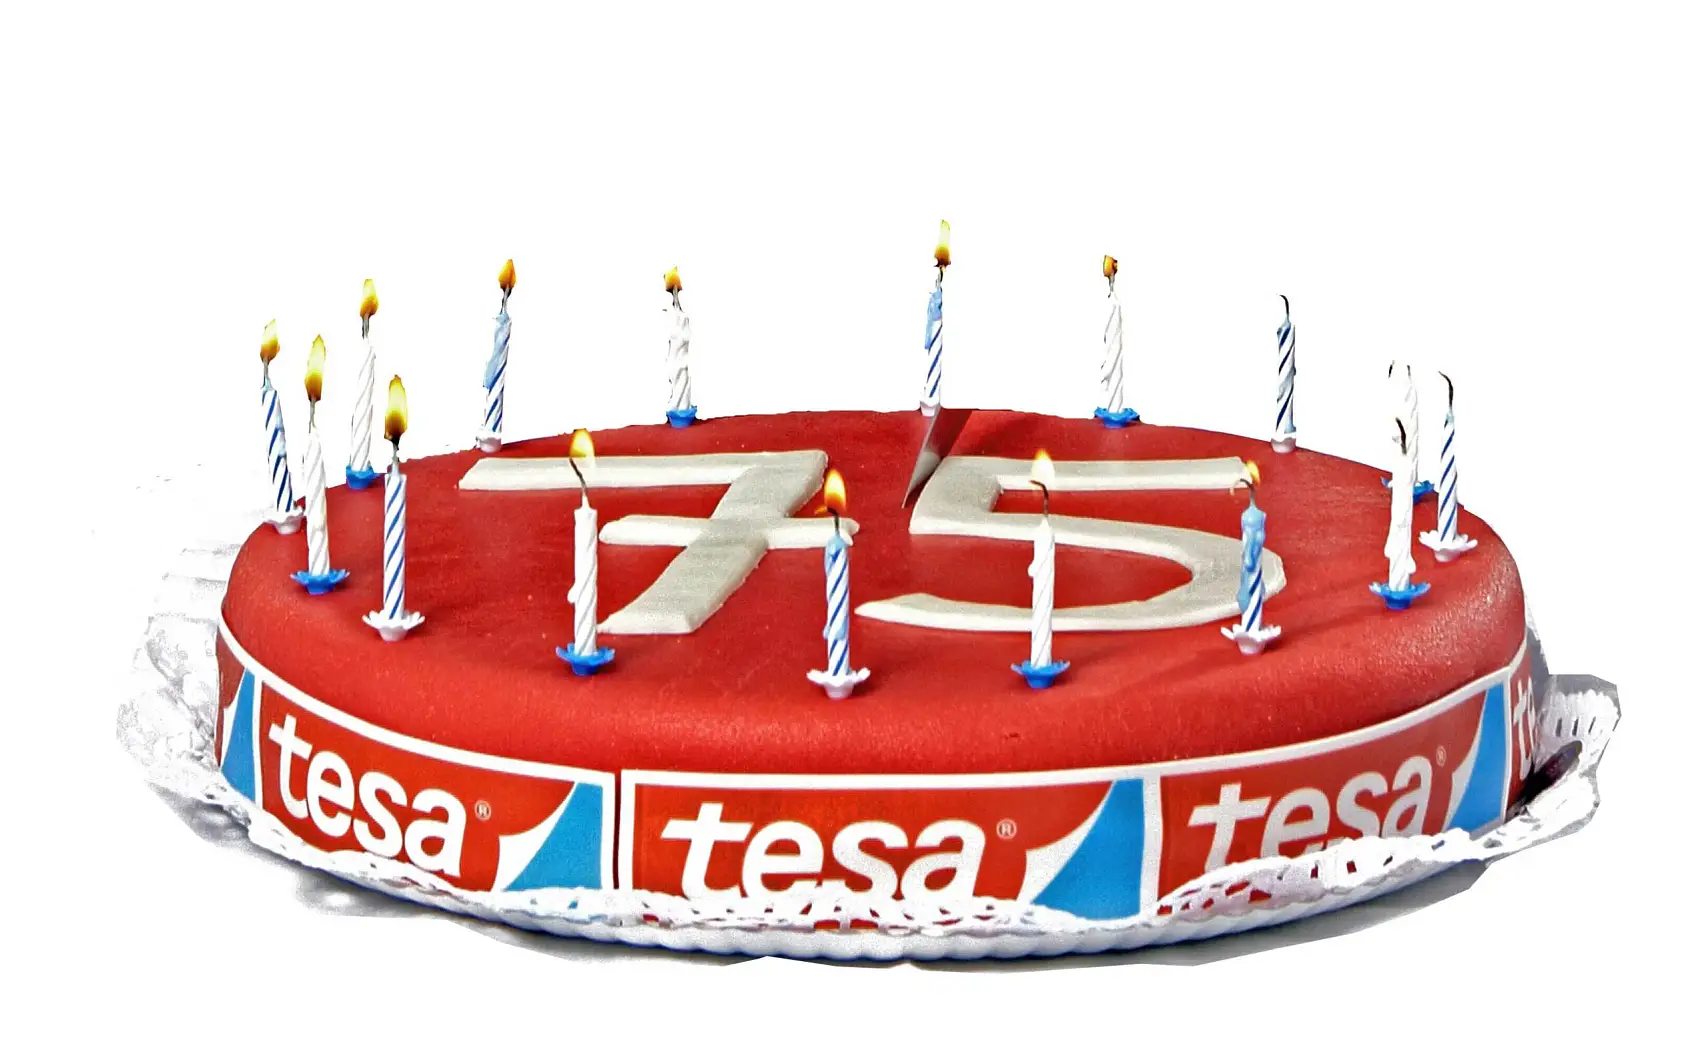 In 2011 tesa celebrated its 75th birthday